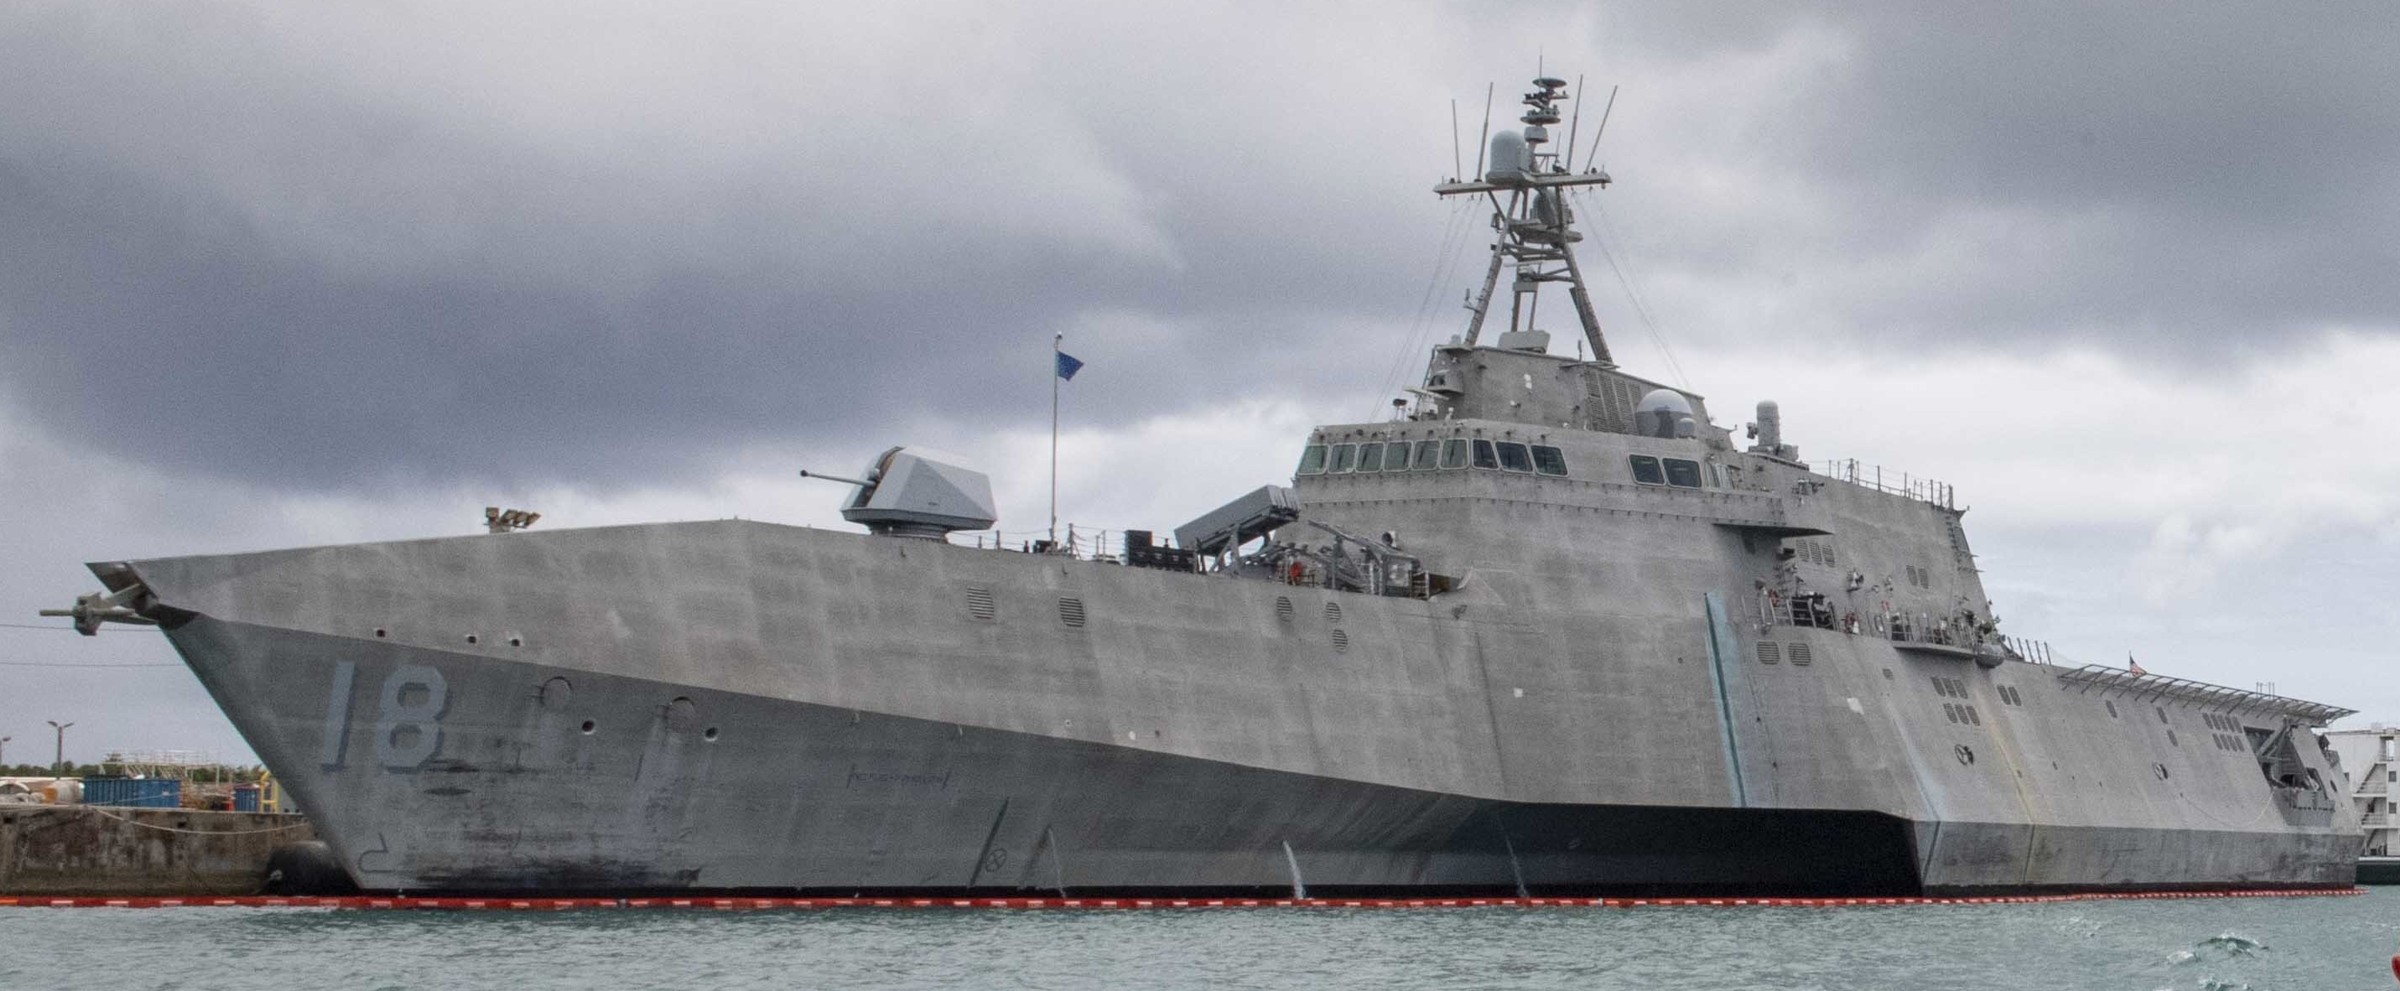 lcs-18 uss charleston independence class littoral combat ship us navy apra harbor guam 36